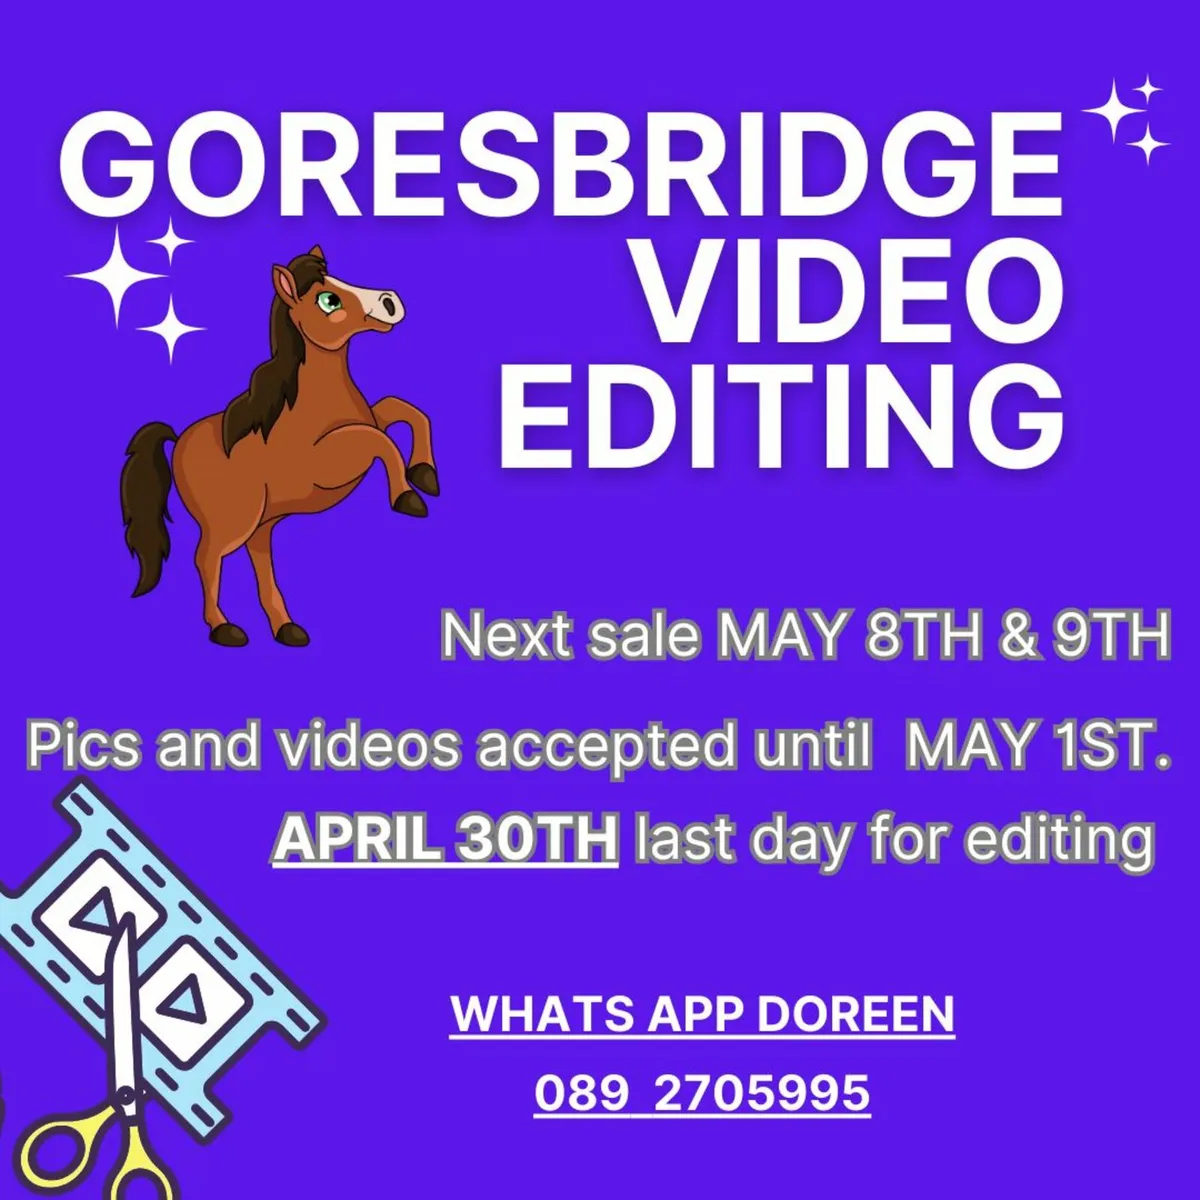 GORESBRIDGE SALES VIDEOS